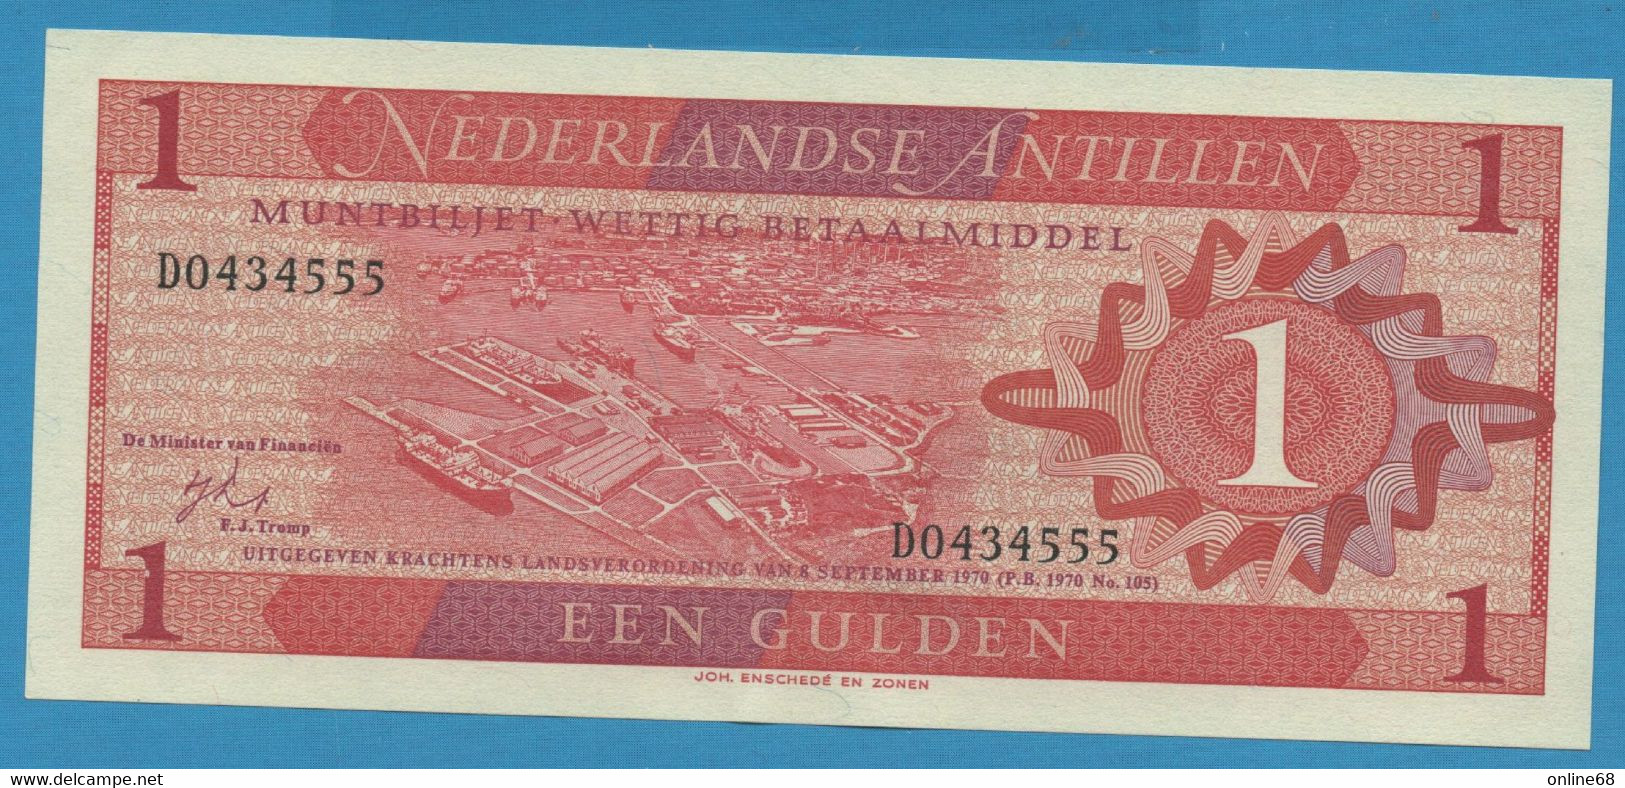 NEDERLANDSE ANTILLEN 1 GULDEN 08.09.1970 # D0434555 P# 20 Willemstad Curaçao - Antillas Neerlandesas (...-1986)